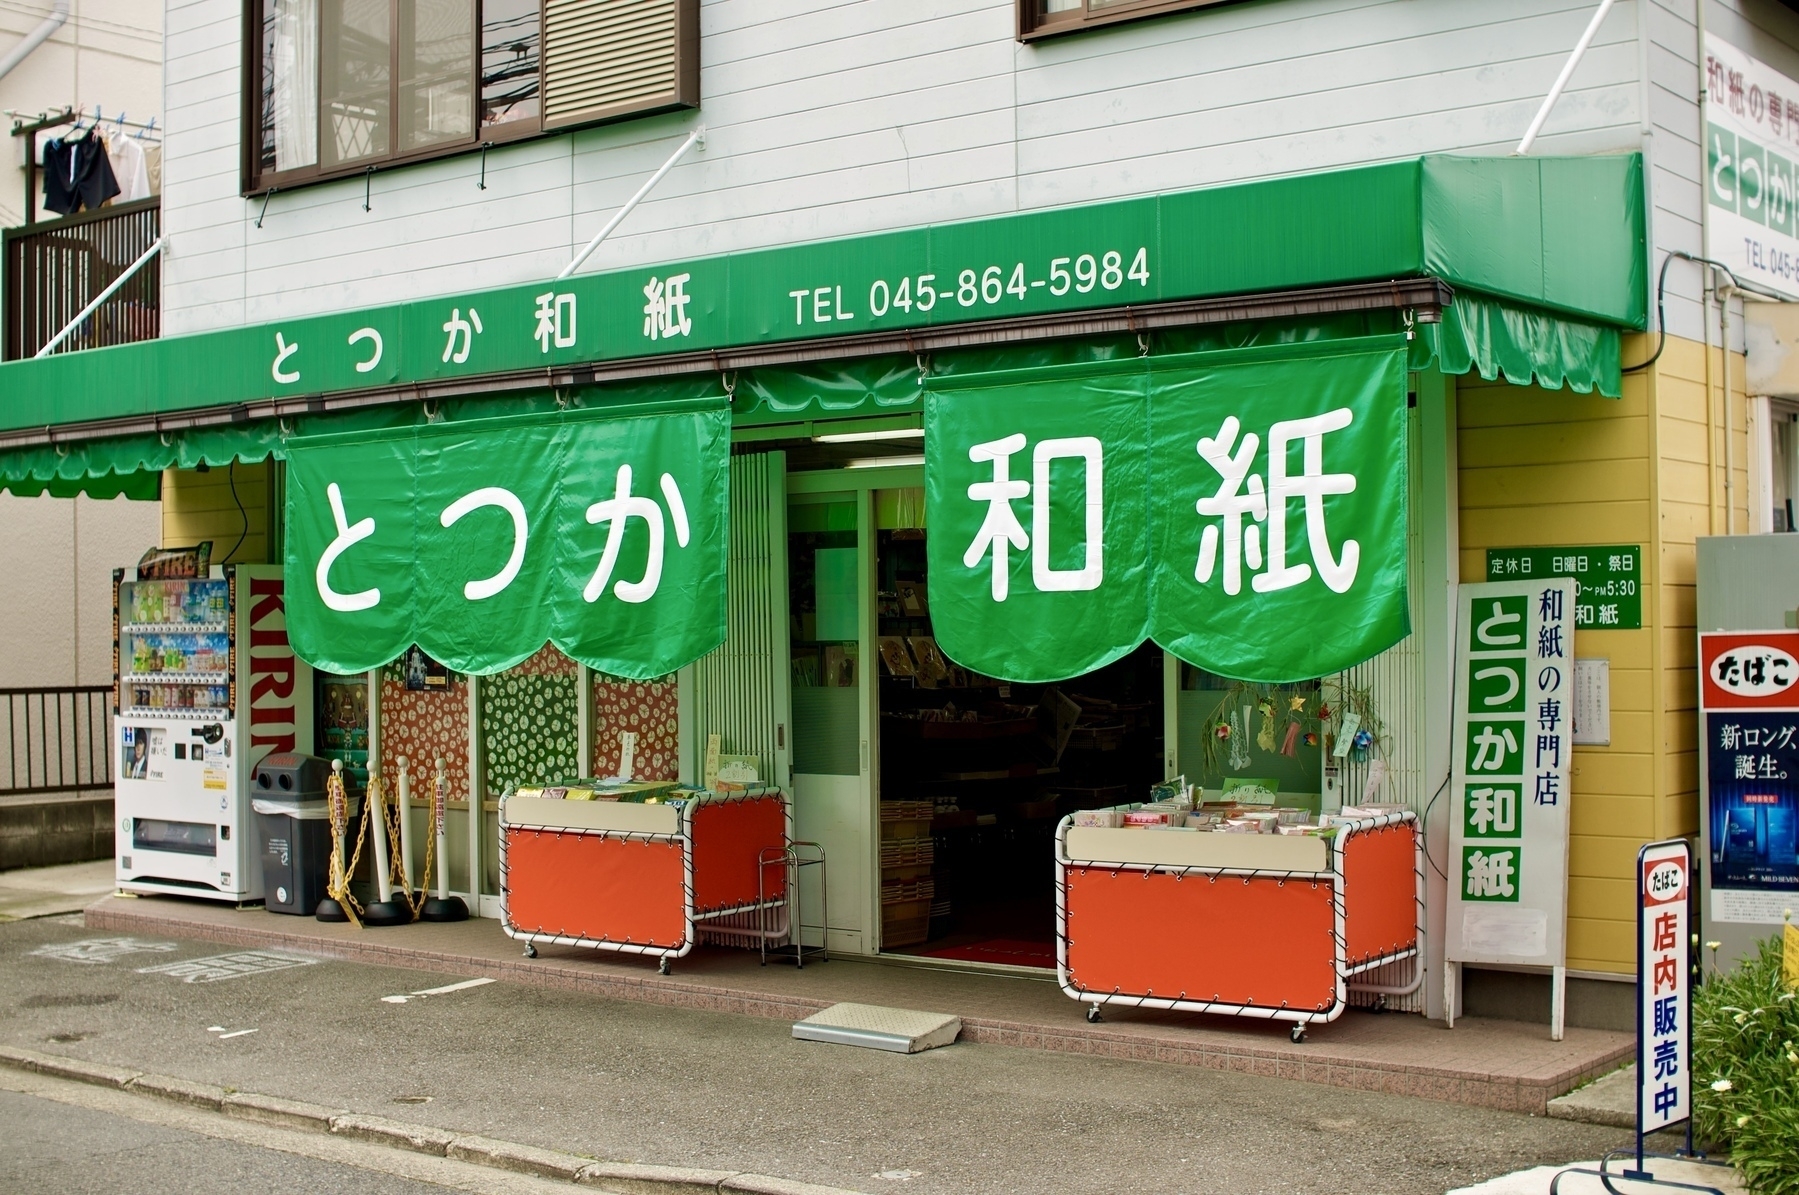 Totsuka Washi (Japanese paper) storefront with green awning. 